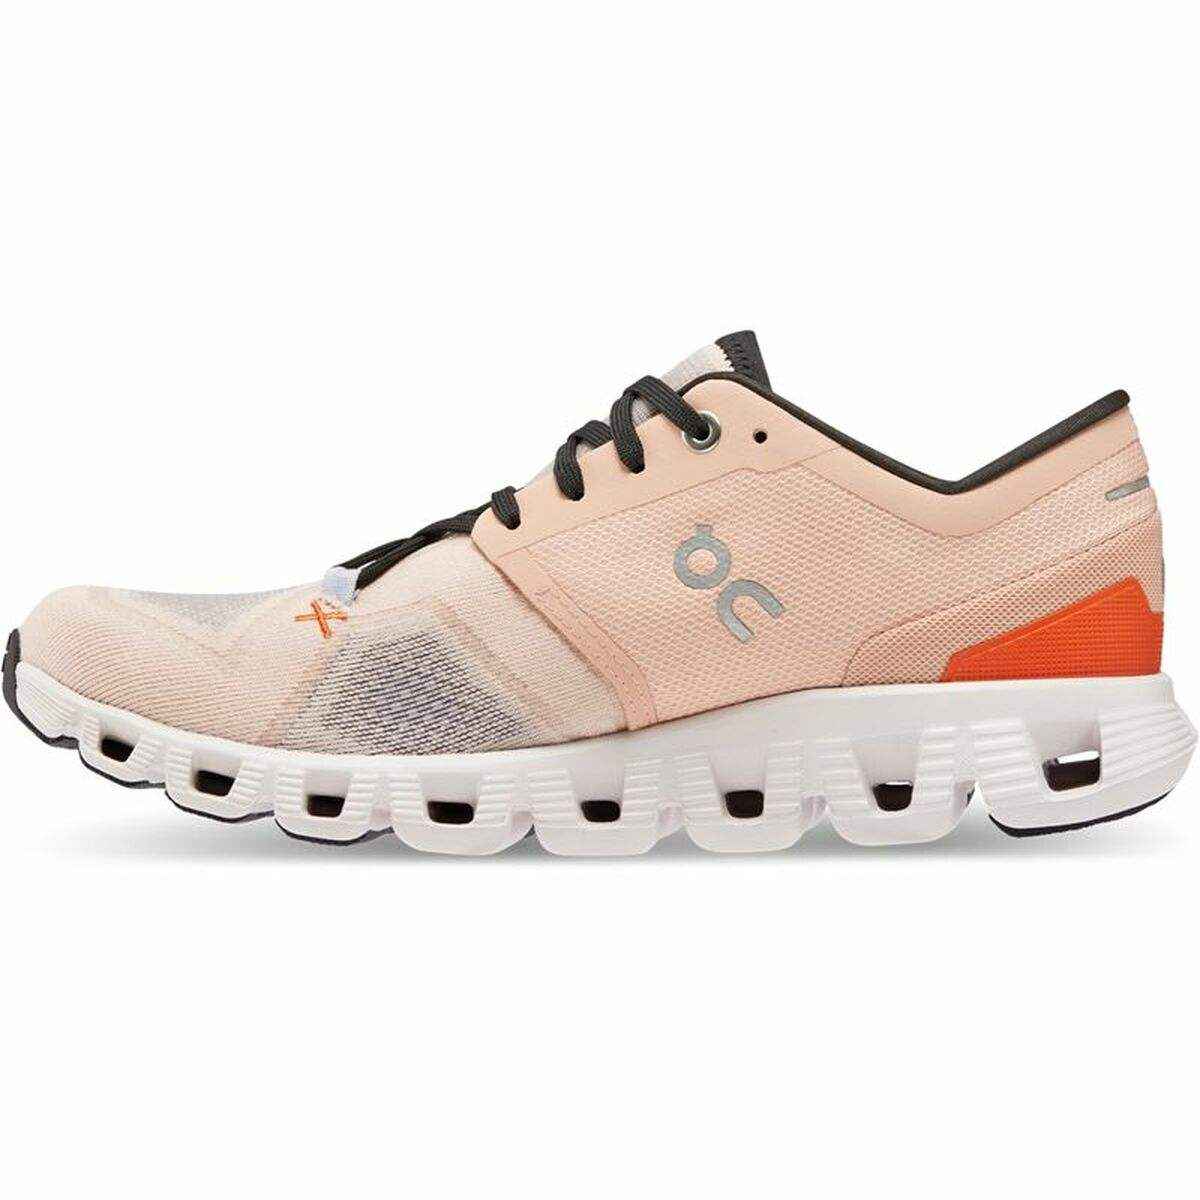 Chaussures de Running pour Adultes On Running Cloud X 3 Femme Beige - On Running - Jardin D'Eyden - jardindeyden.fr